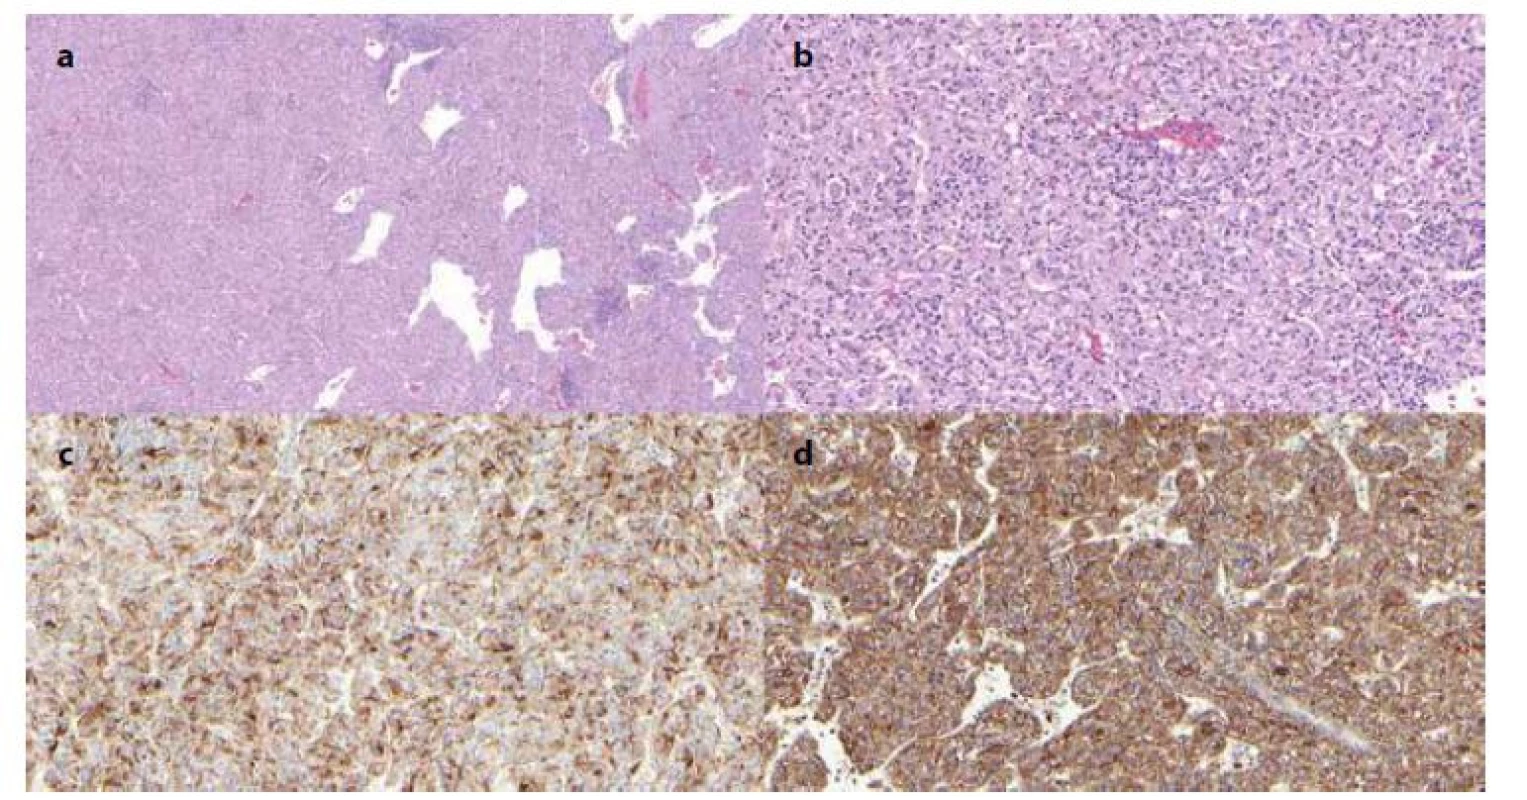 Histologické řezy preparátu angiomyolipomu
2a − Hematoxylin-Eosin barvení, zvětšení 5×; 2b − Hematoxylin-Eosin barvení, zvětšení 200×;
2c − HMB-45 imunohistochemické barvení, zvětšení 200×; 2d − Cathepsin K imunohistochemické barvení, zvětšení 200×.<br>
Fig. 2: Histological samples of the angiomyolipoma specimen
2a − Hematoxylin and eosin staining, magnification 50×; 2b − Hematoxylin and eosin staining, magnification 200×; 2c − HMB-45
immunohistochemical staining, magnification 200×; 2d − Cathepsin K immunohistochemical staining, magnification 200×.